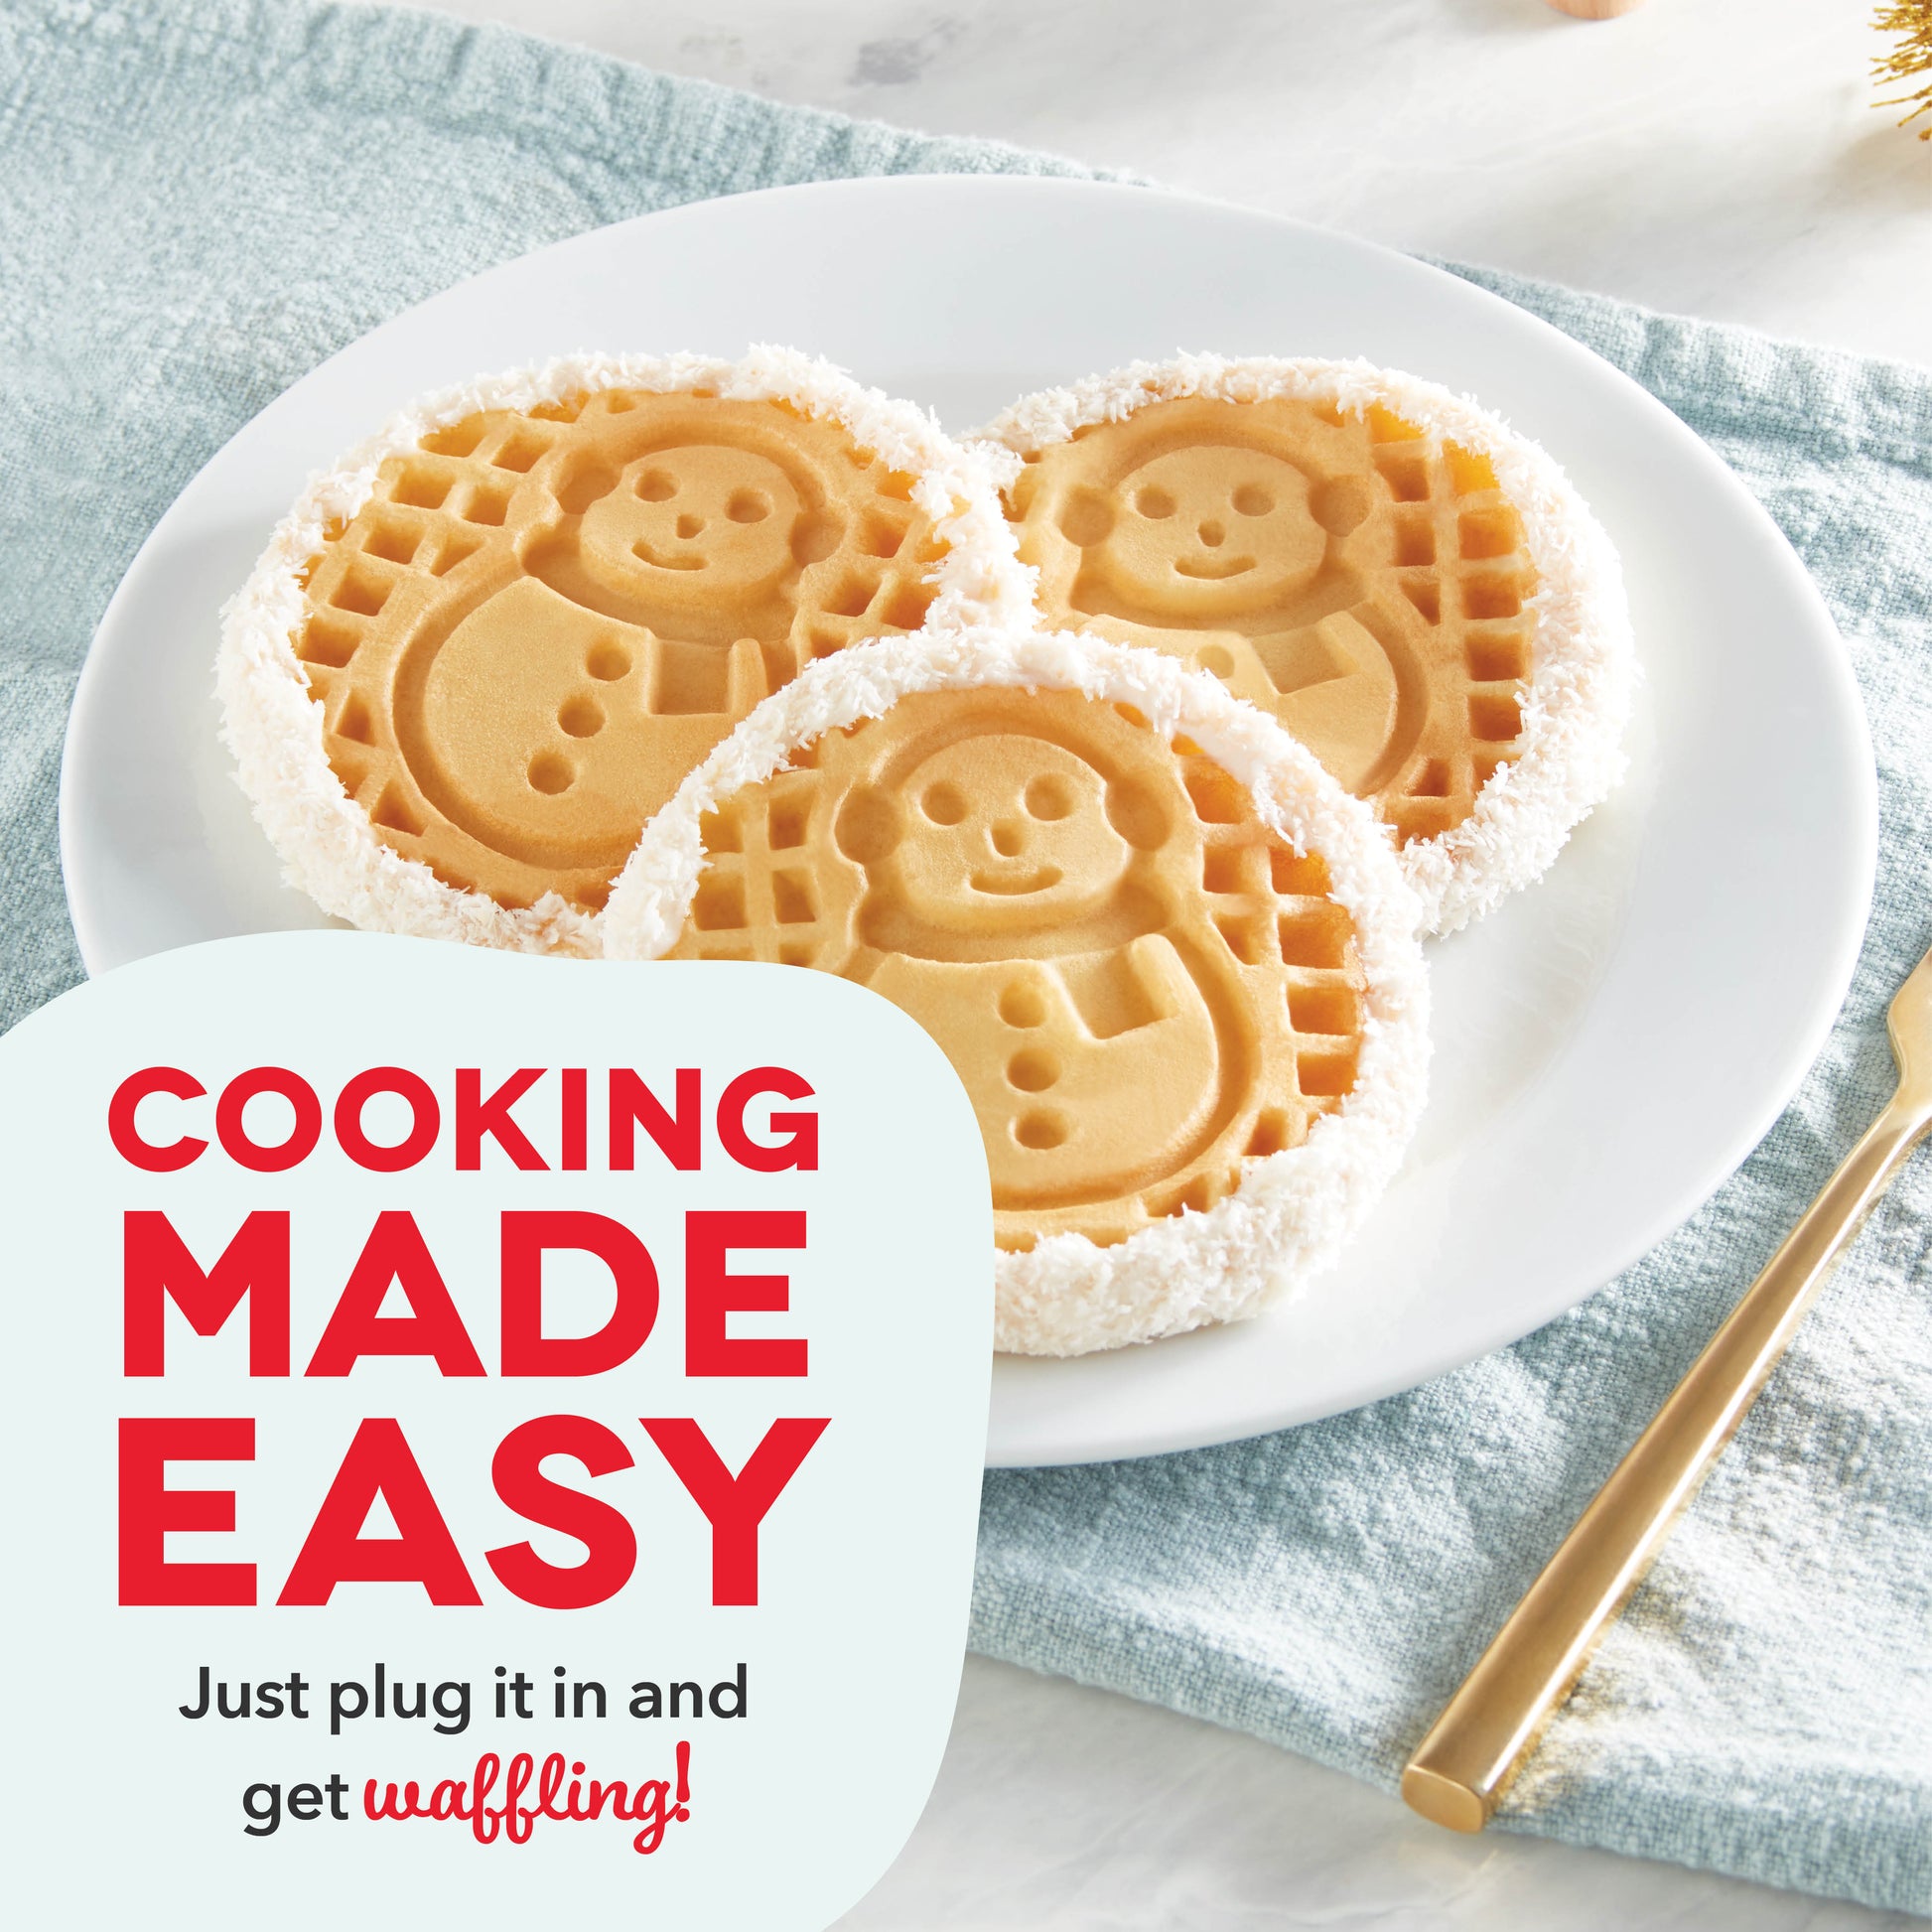 Dash Cream Mini Waffle Maker with Ceramic Nonstick Plates | Crate & Barrel